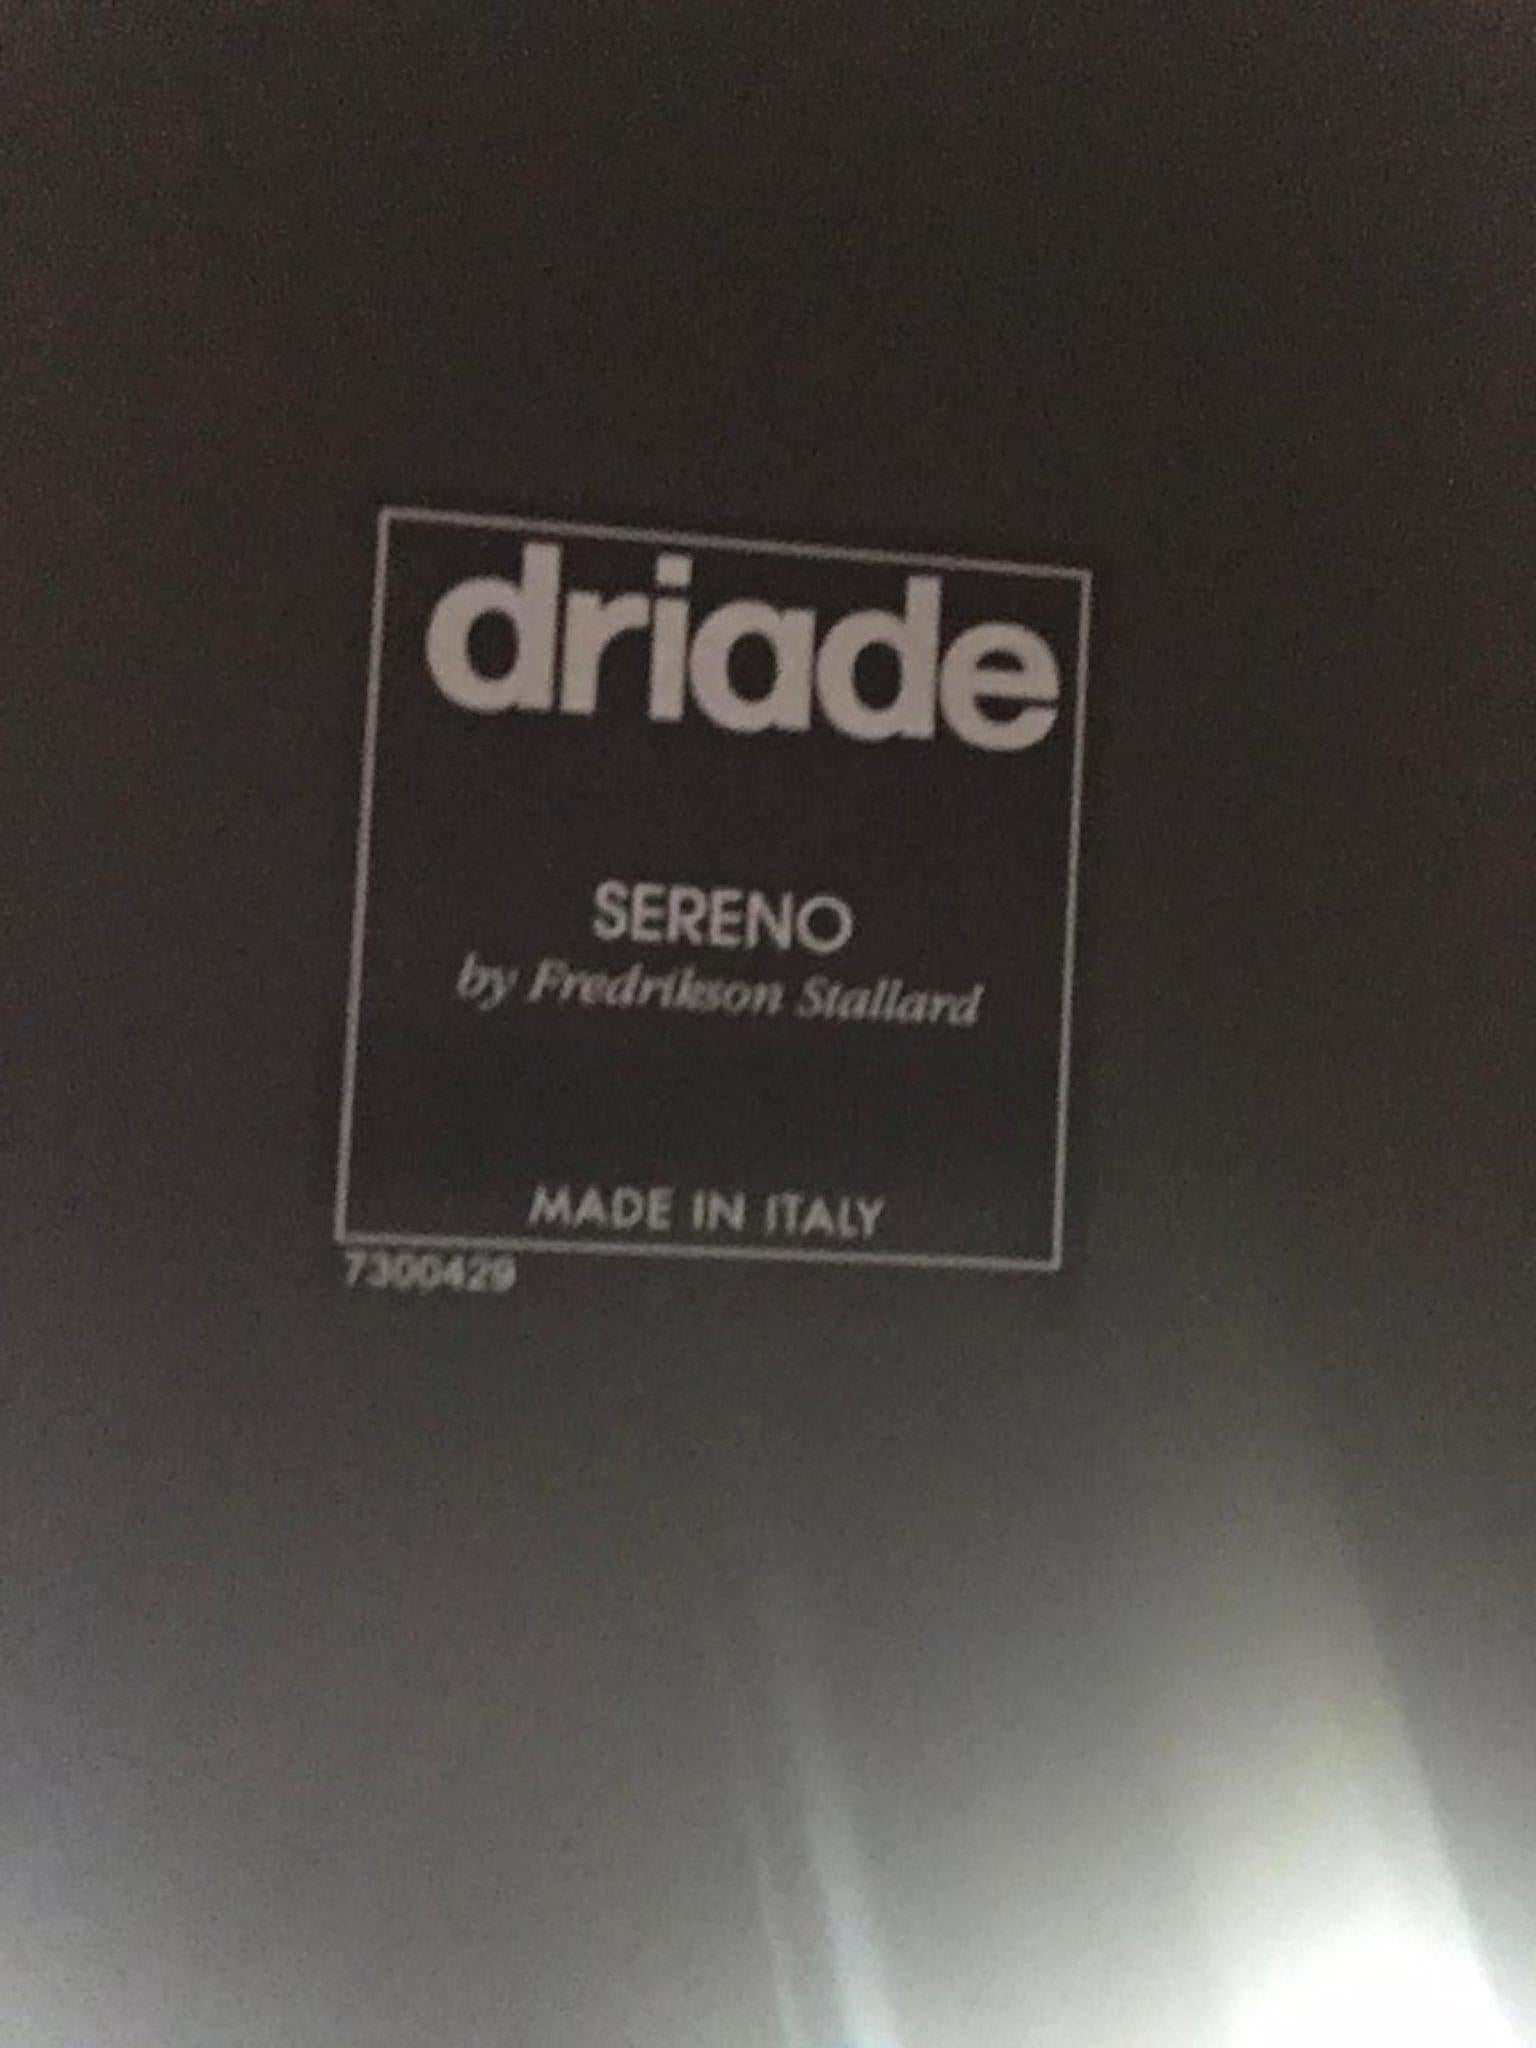 Stainless Steel Fredrikson Stallard Coffee Table Model Sereno Driade, Italy